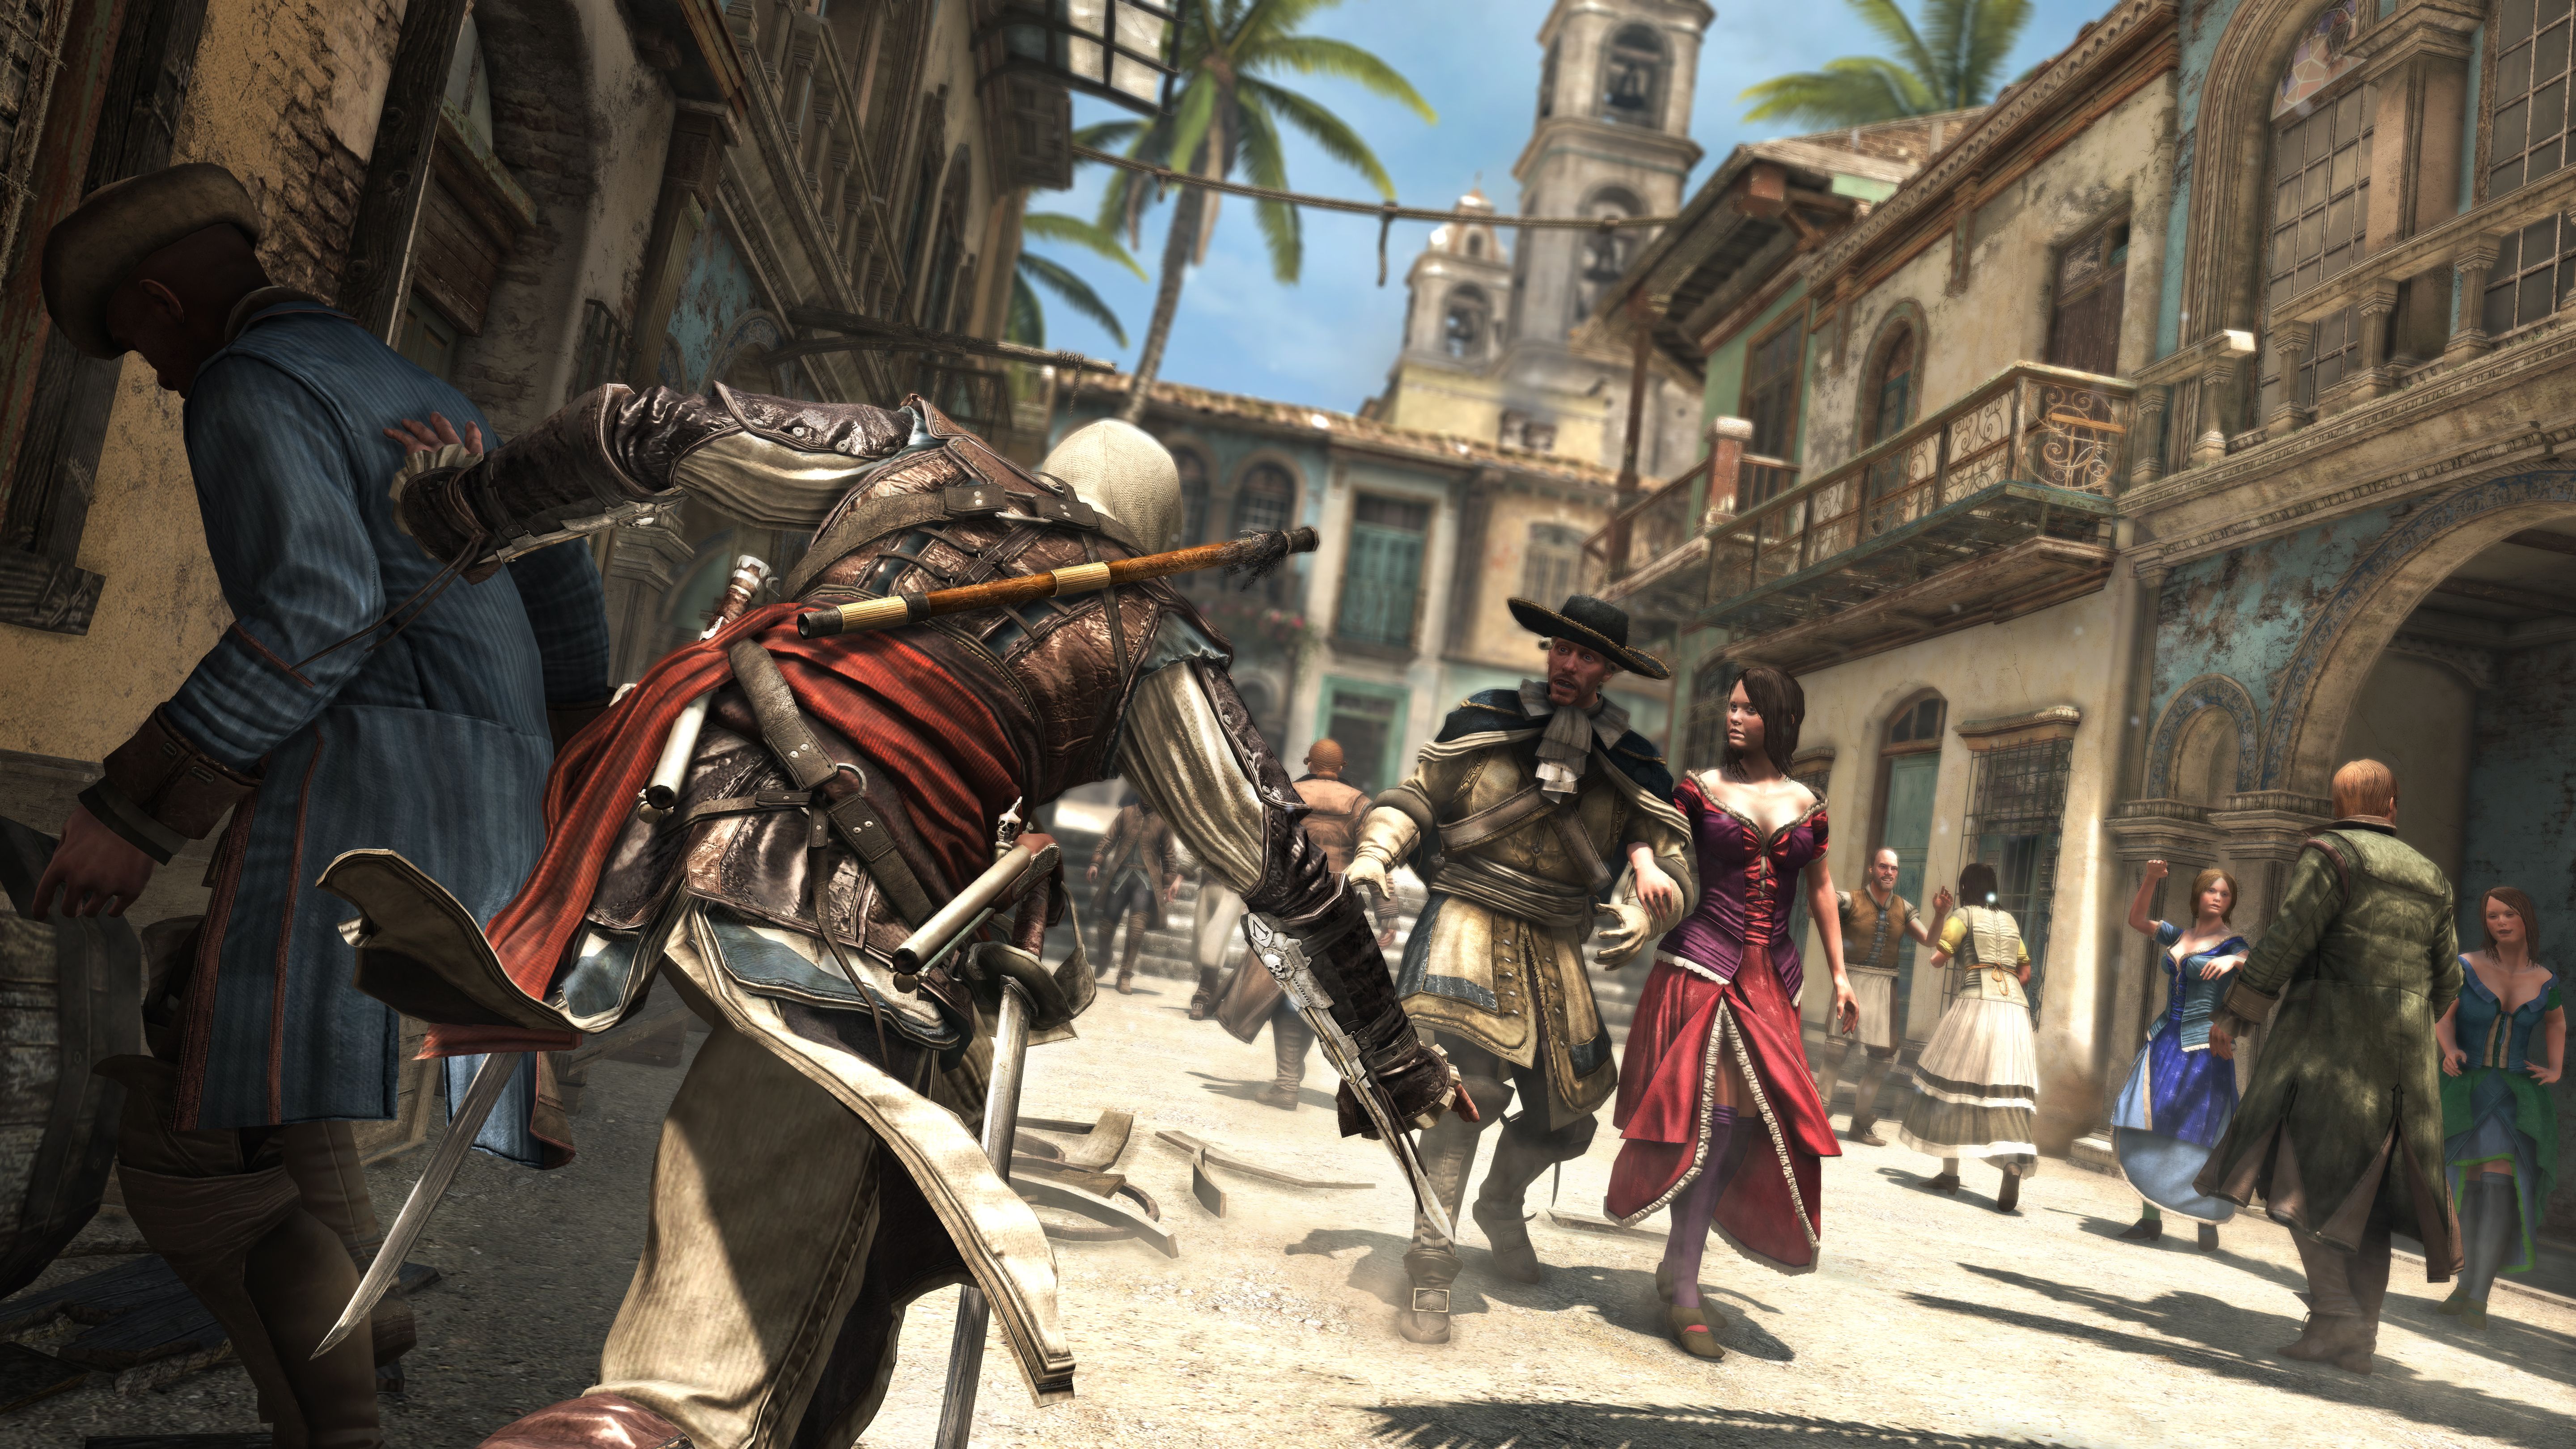 Ассасин 4 требования. Ассасин 4 Гавана. Assassin's Creed 4 Black Flag. Assassin’s Creed IV: Black Flag – 2013. Ассасин Крид 4 черный флаг.